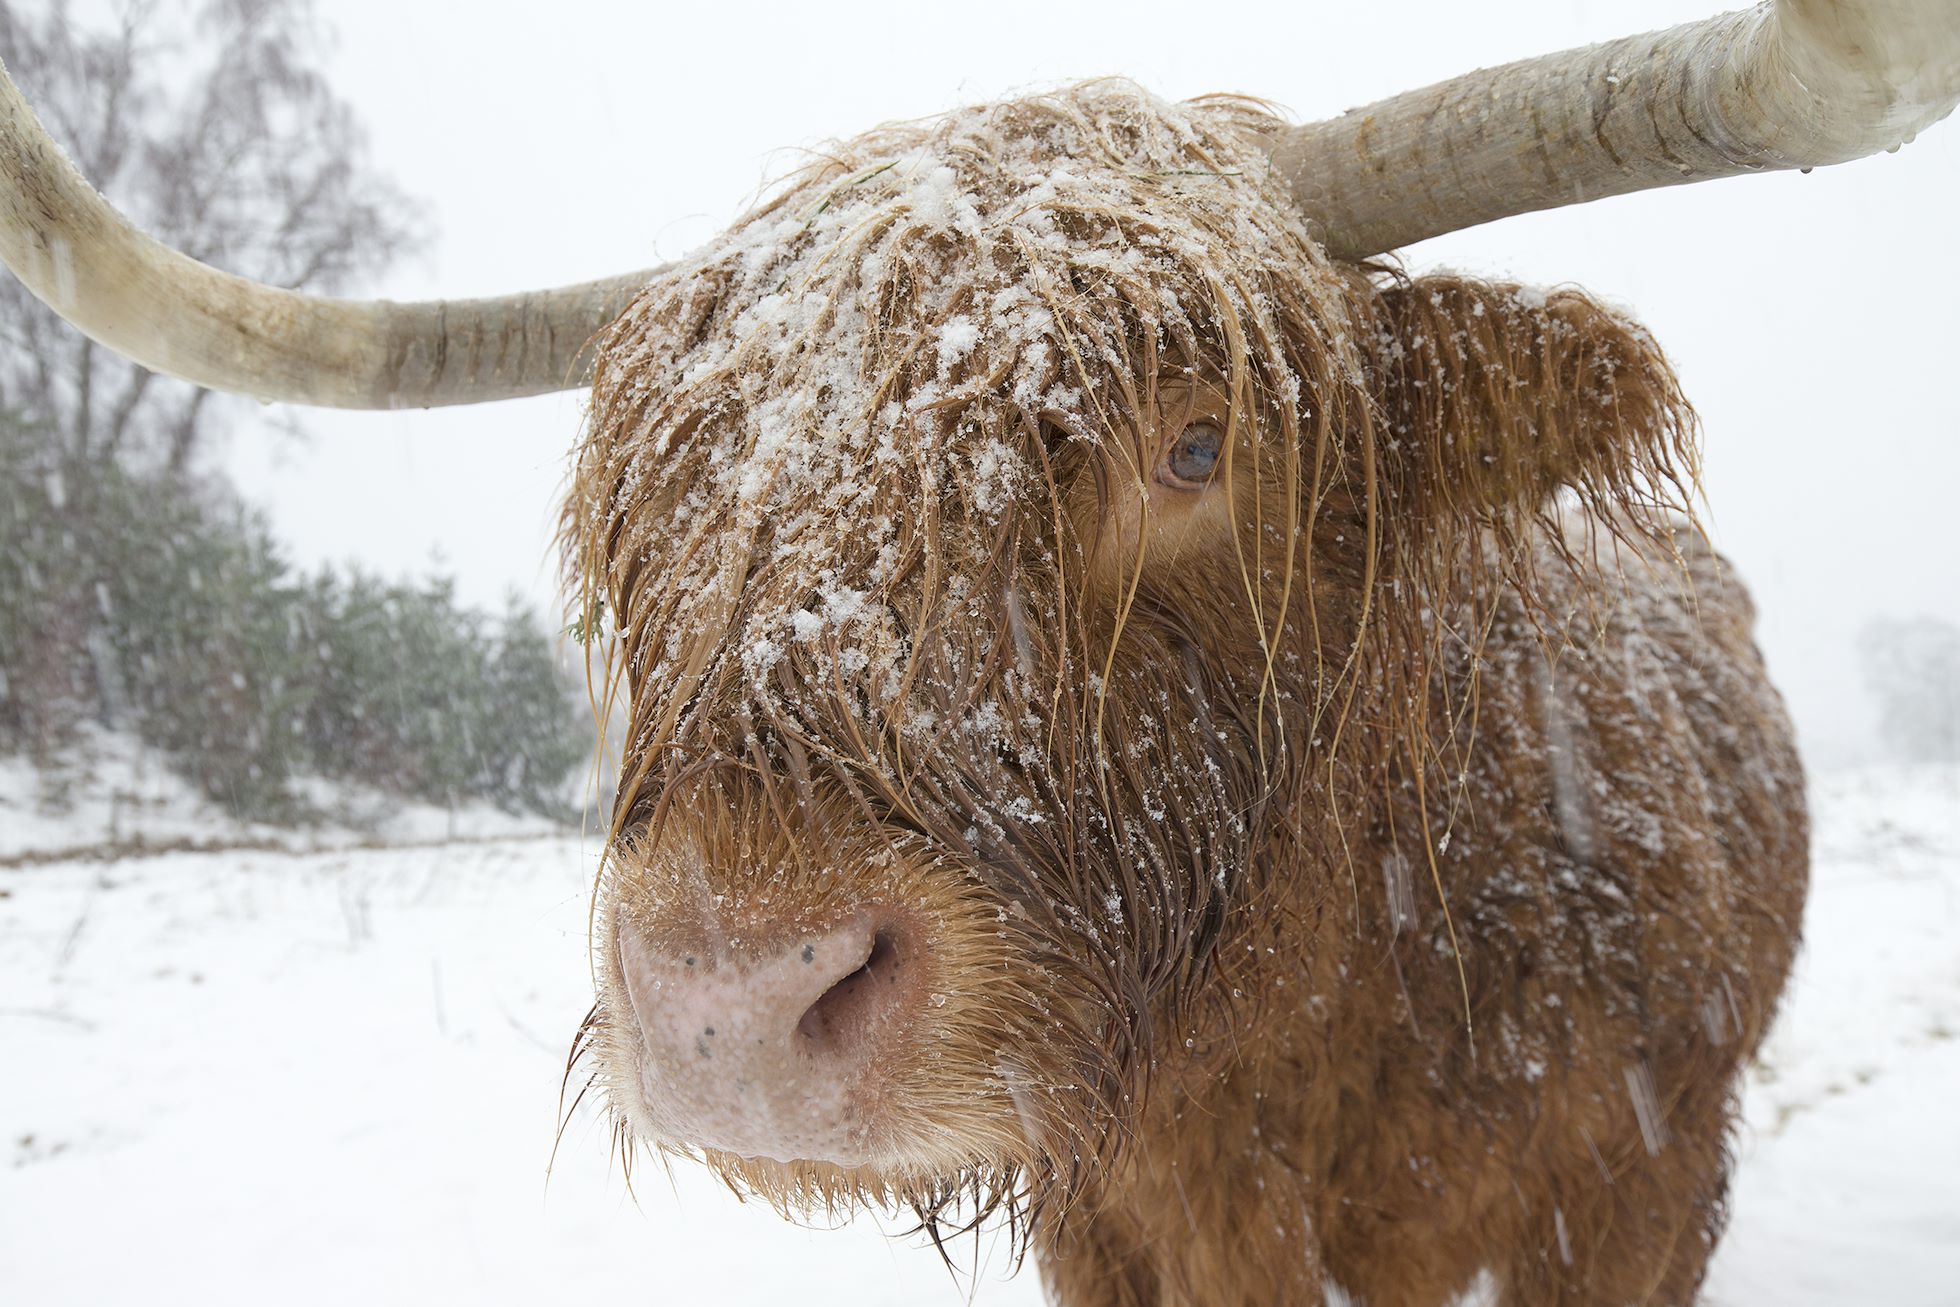 Highland cow in blizzard, Scotland.